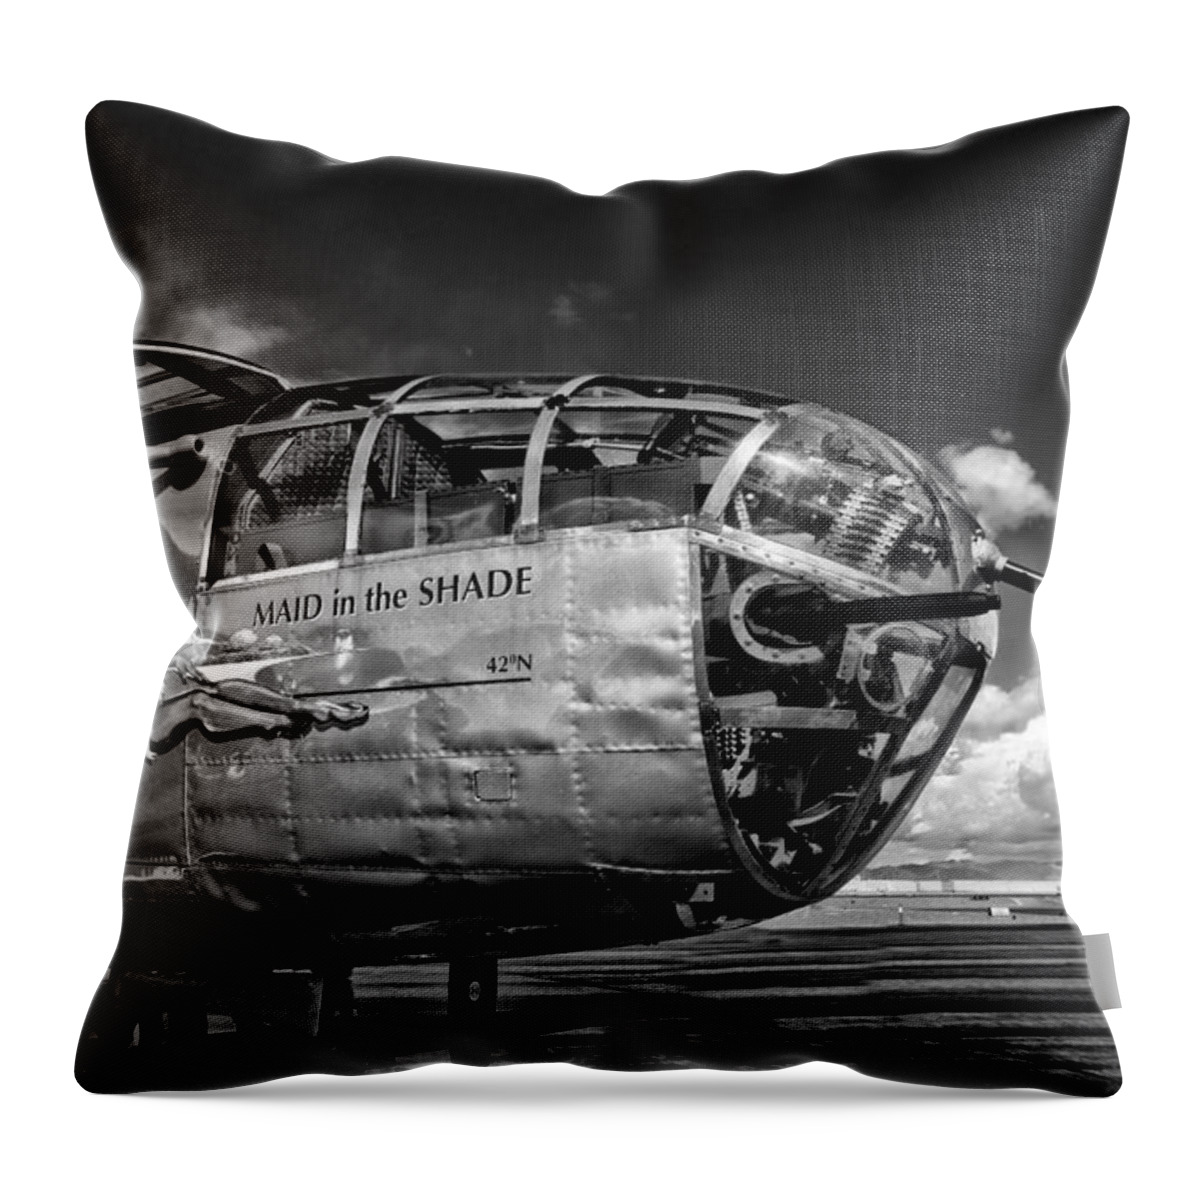 Photograph Throw Pillow featuring the photograph World War II Bomber by Richard Gehlbach